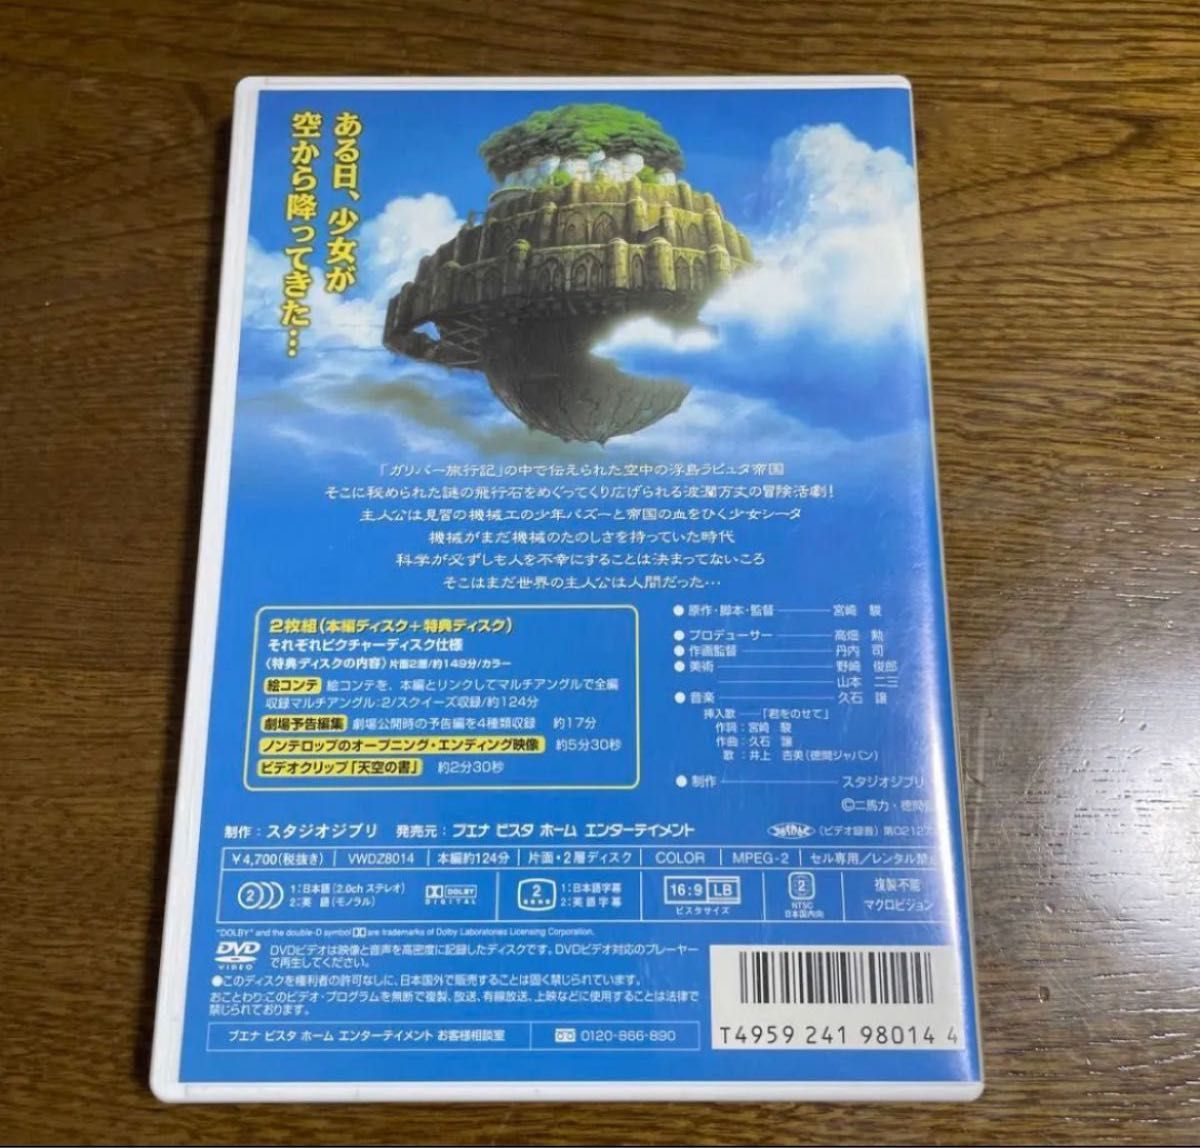 DVD。フォロ割200円引きします。相談で200円引き受けます。商品説明にお得情報？天空の城ラピュタ